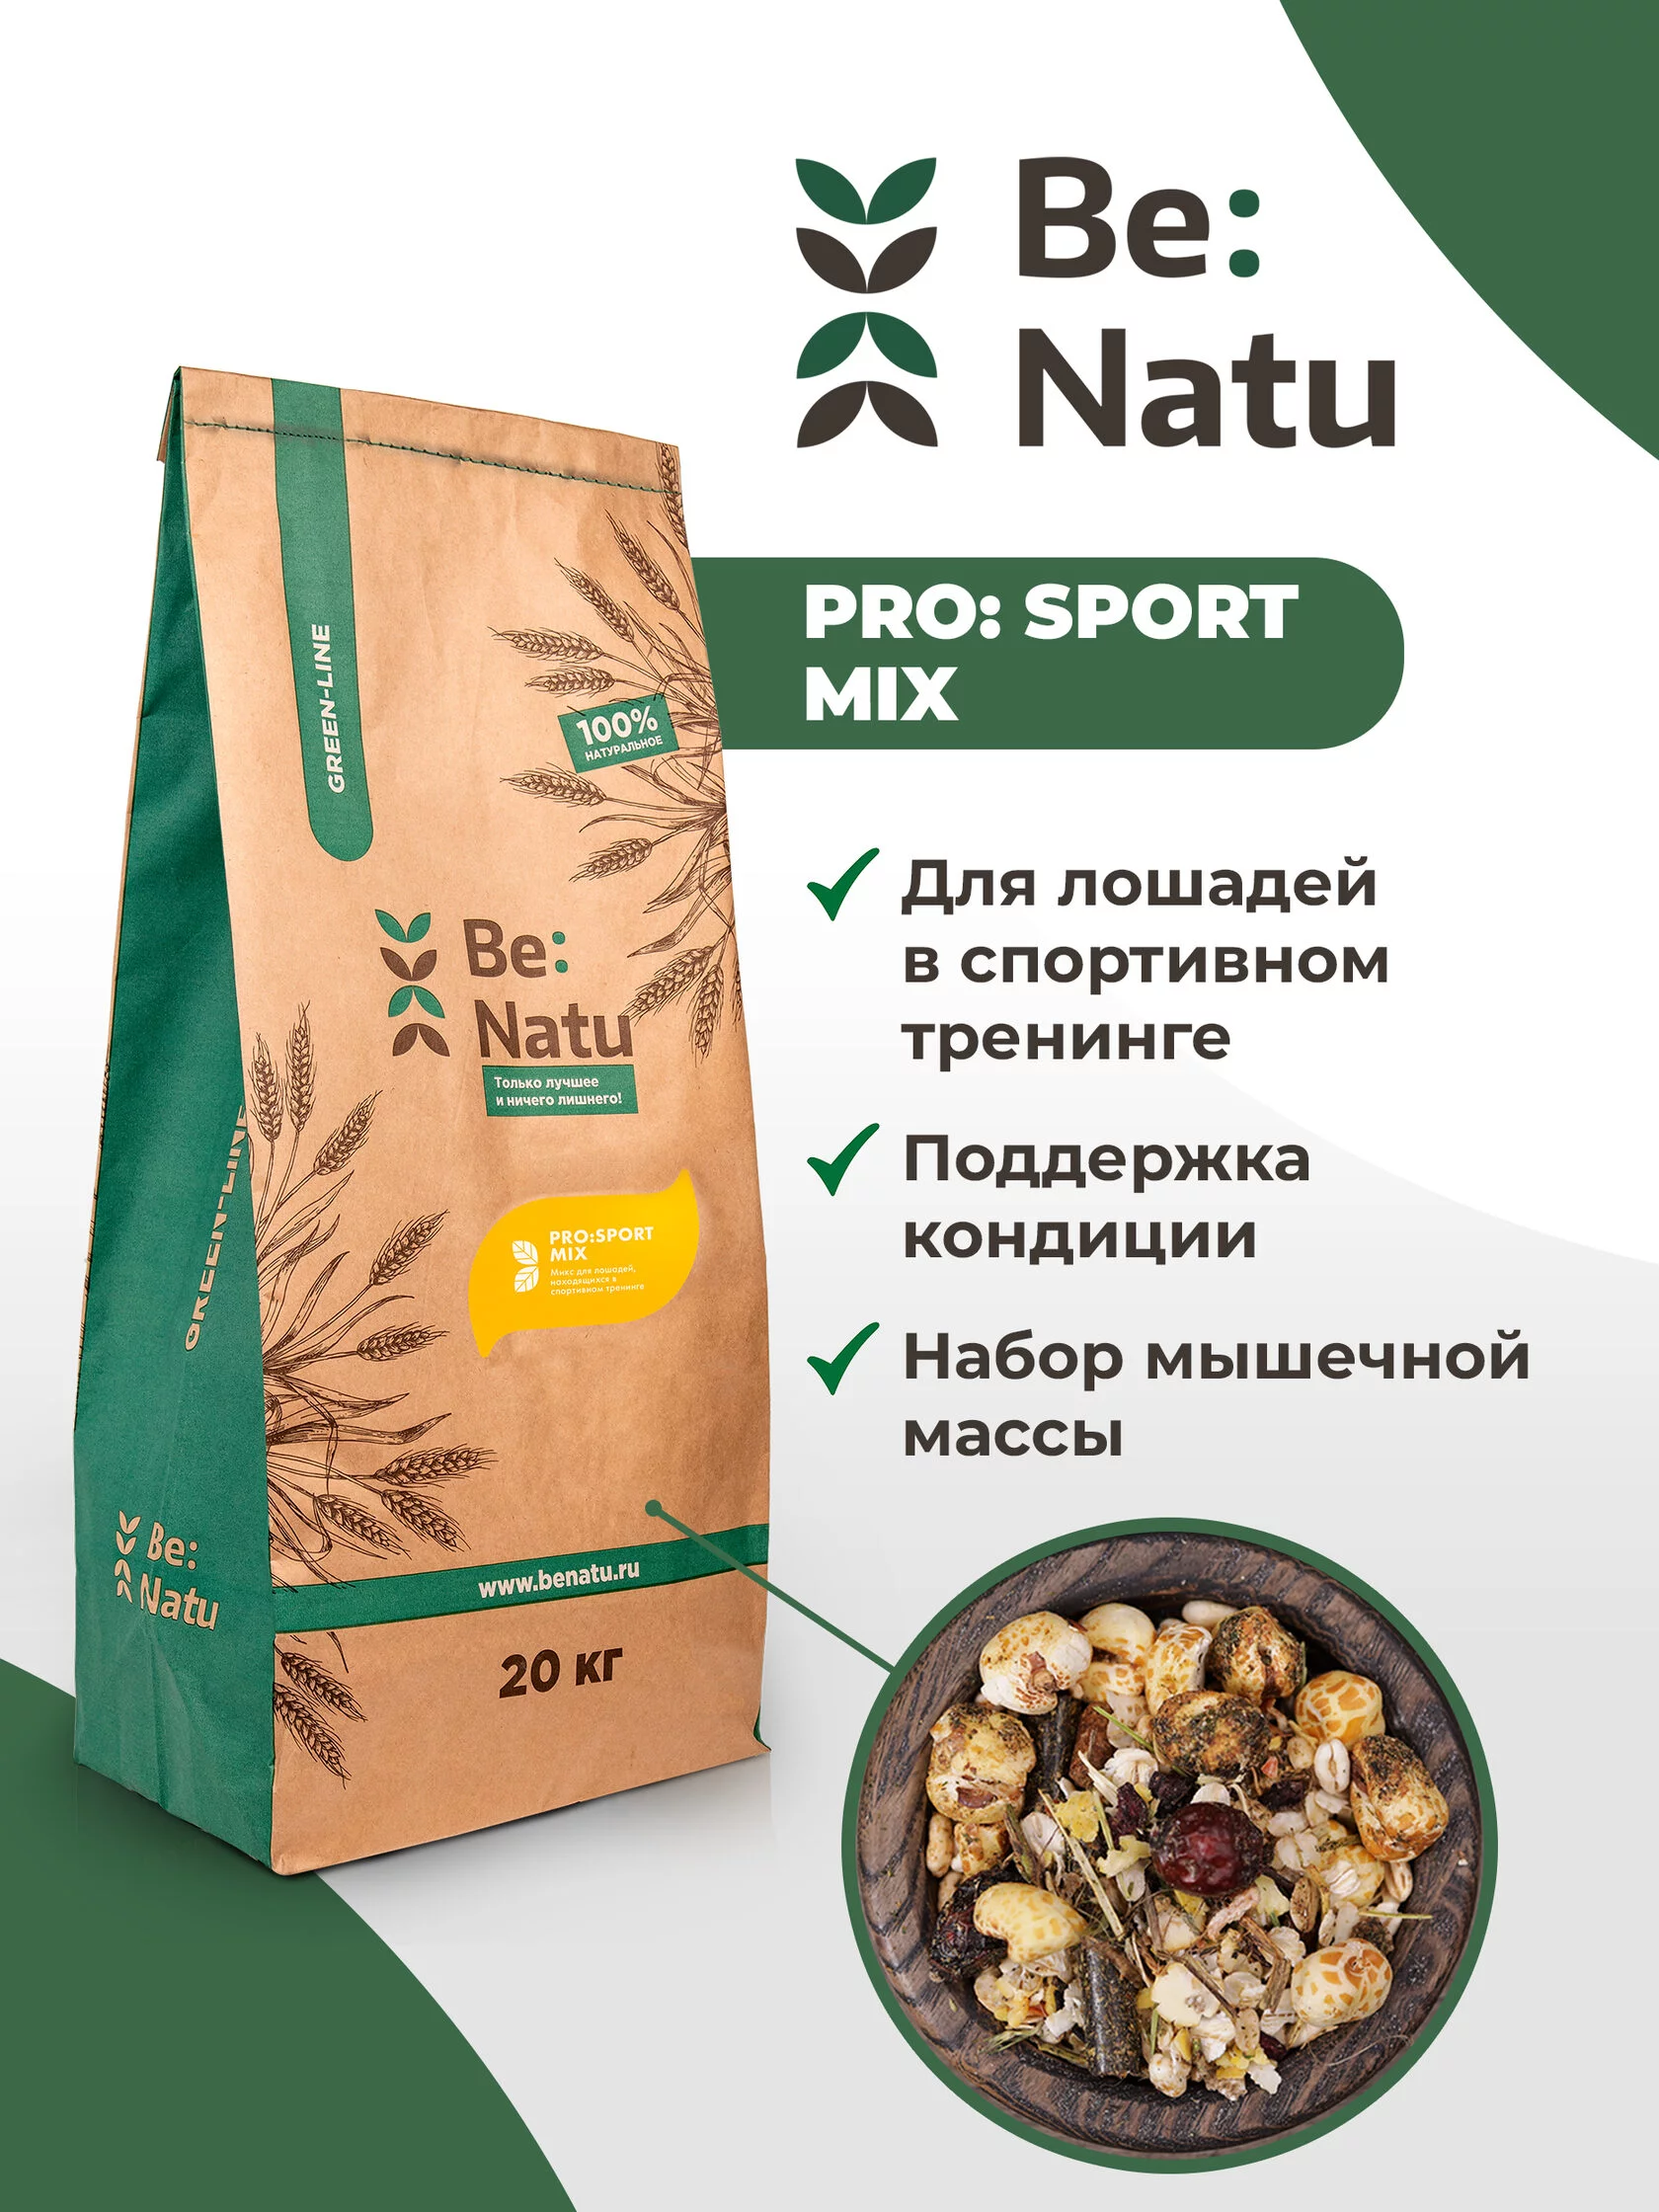  Be:Natu Pro:sport mix 20 